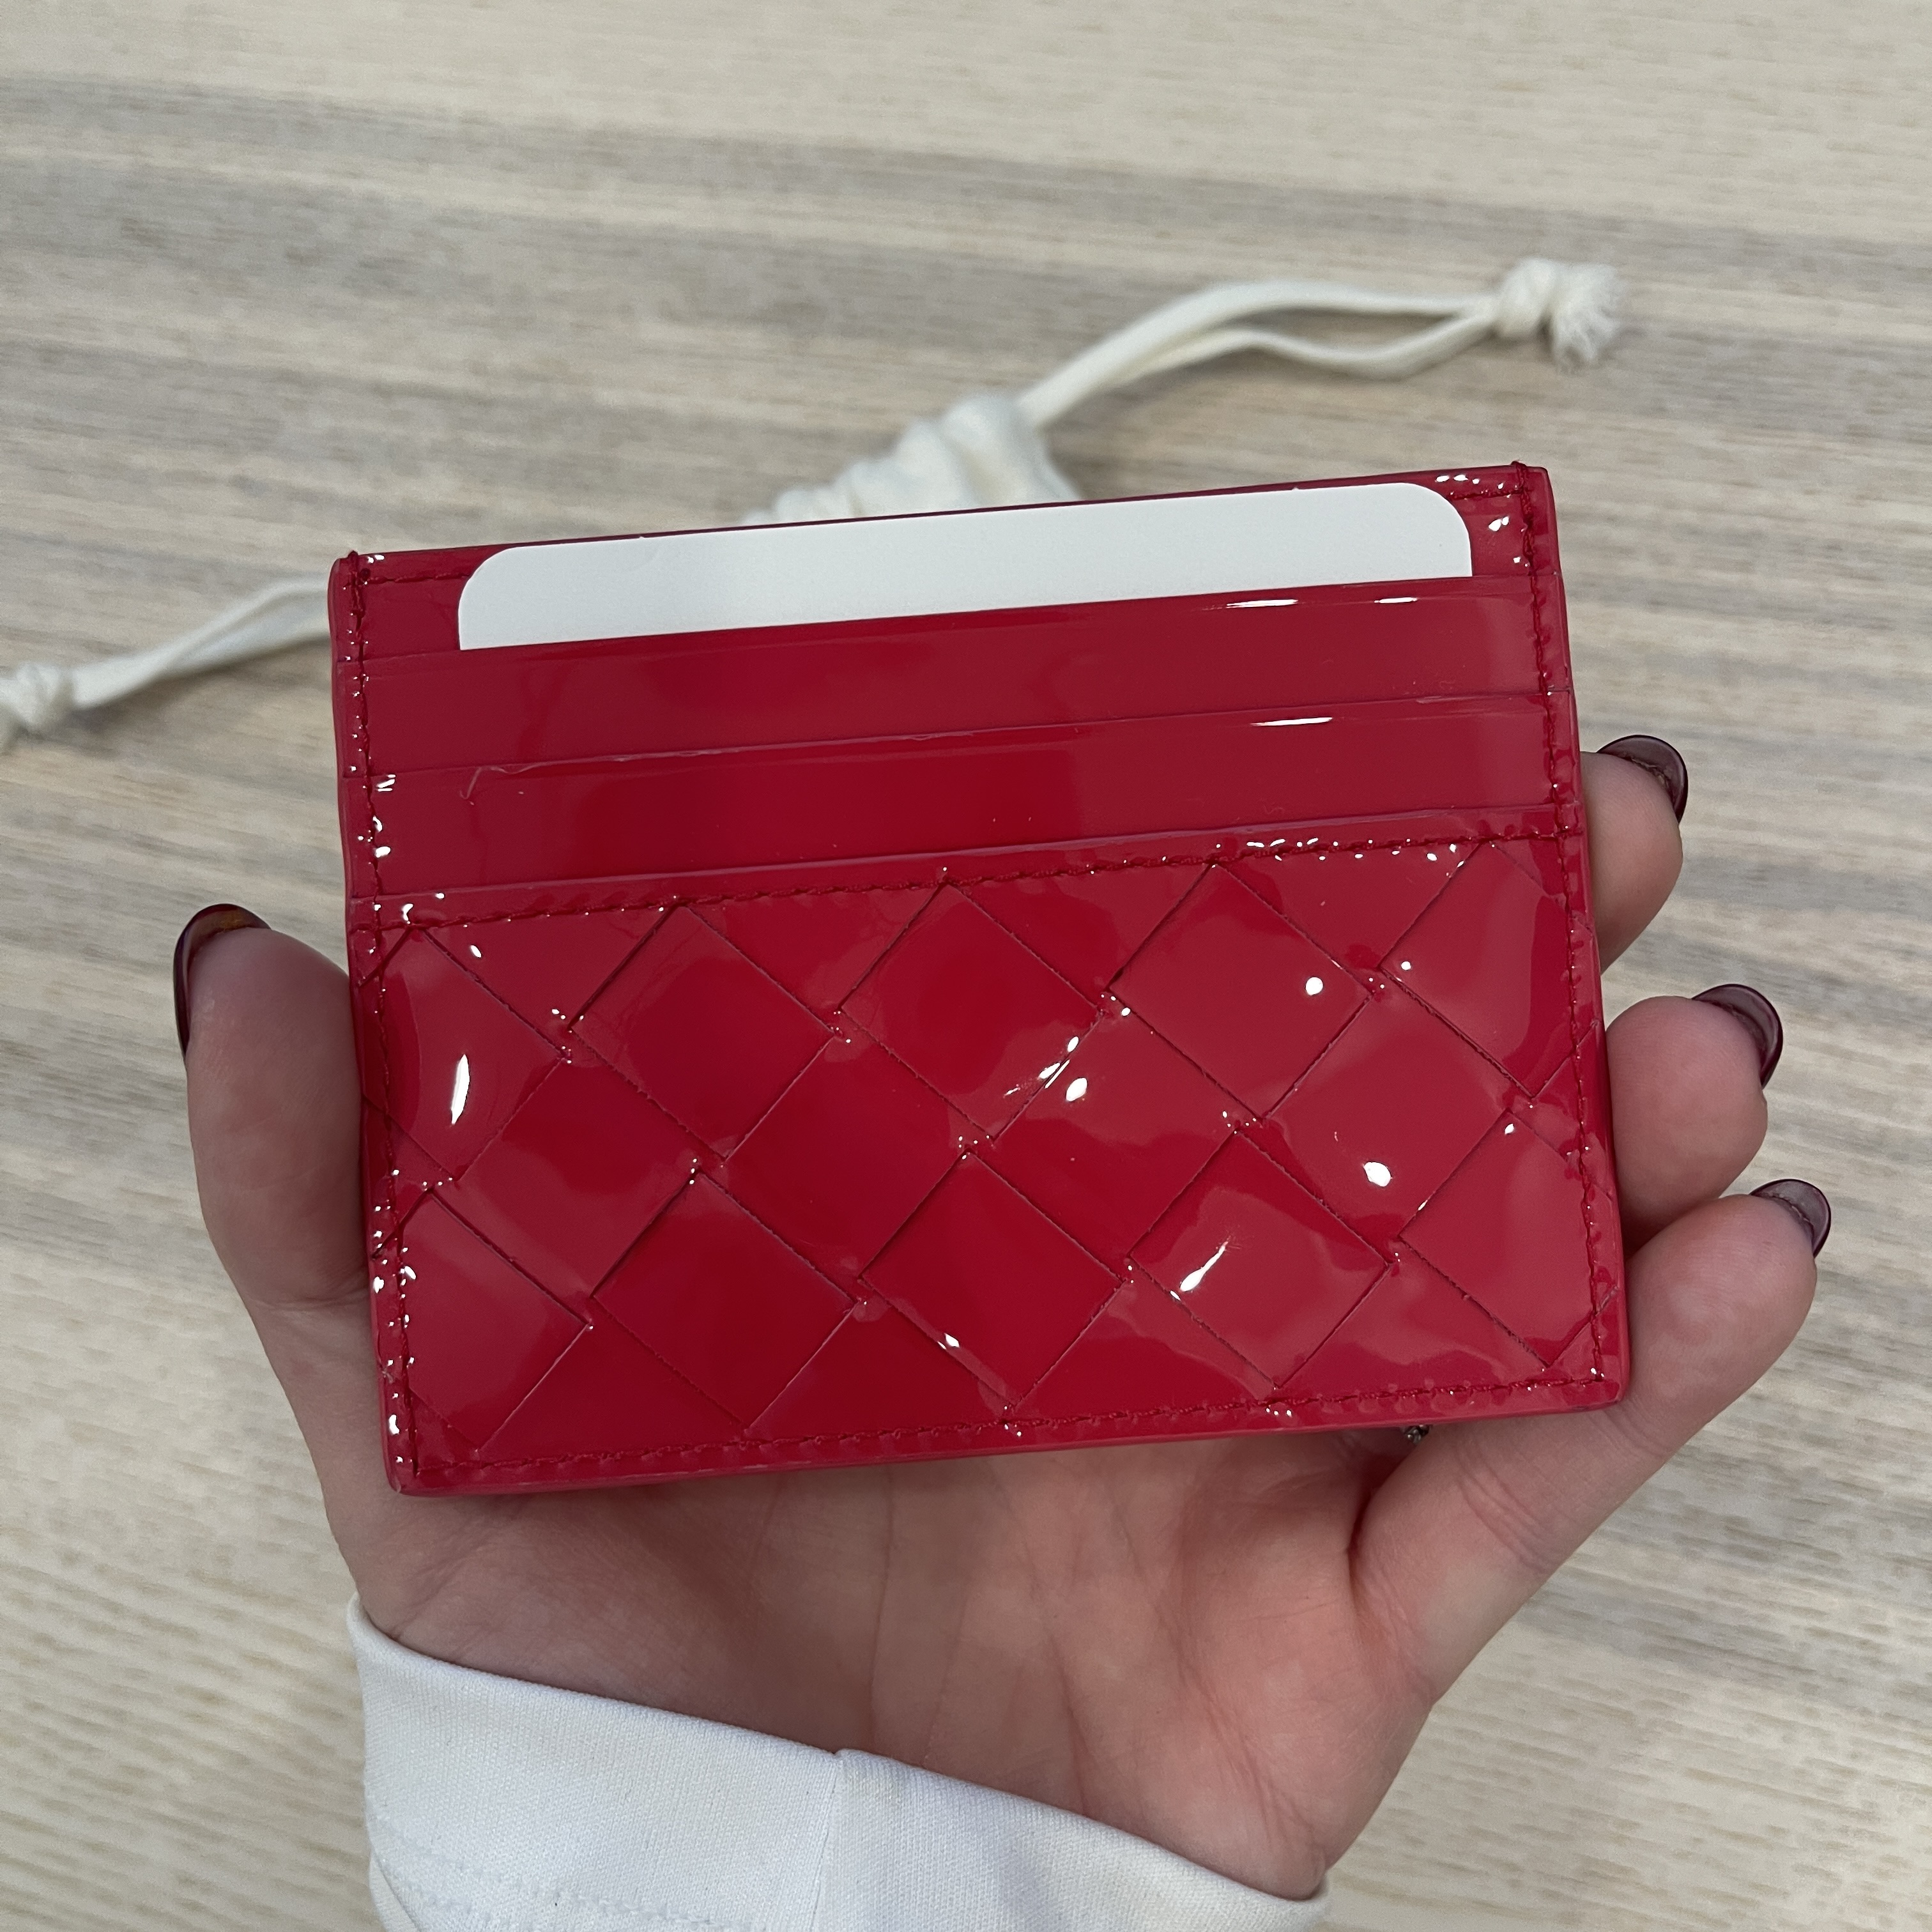 Bottega Veneta Intrecciato Patent Leather Cardholder Candy Red